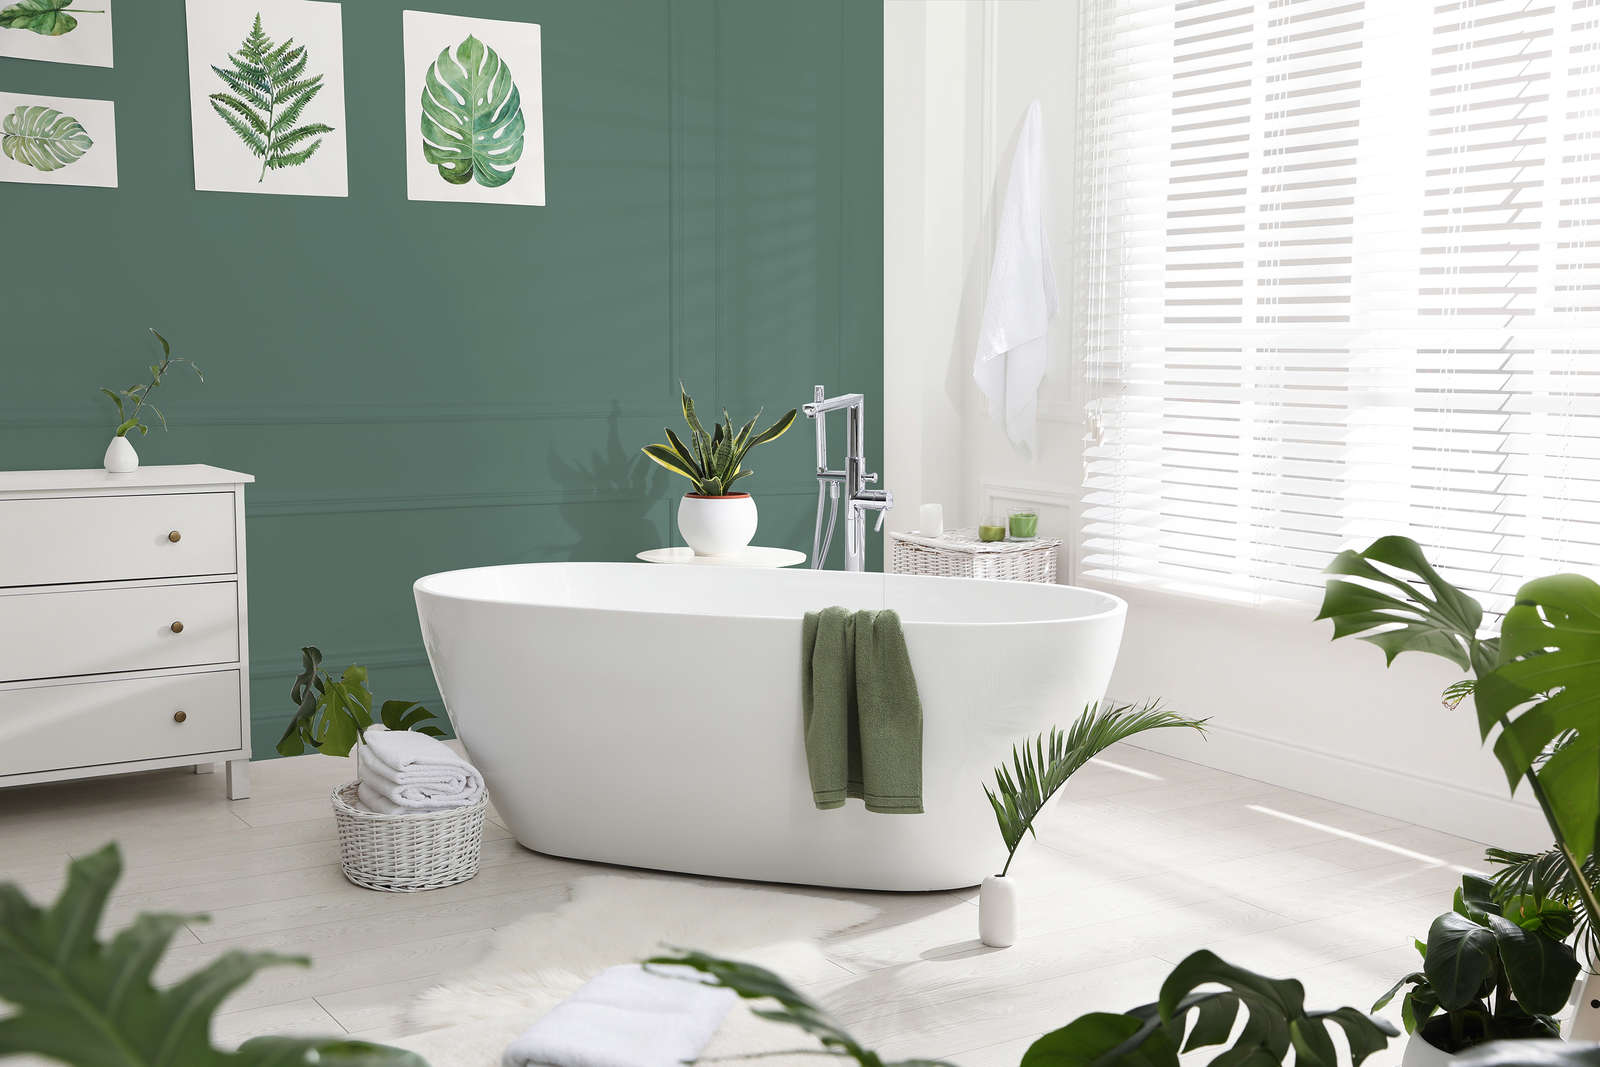             Premium Wall Paint Calm Eucalyptus »Expressive Emerald« NW410 – 5 litre
        